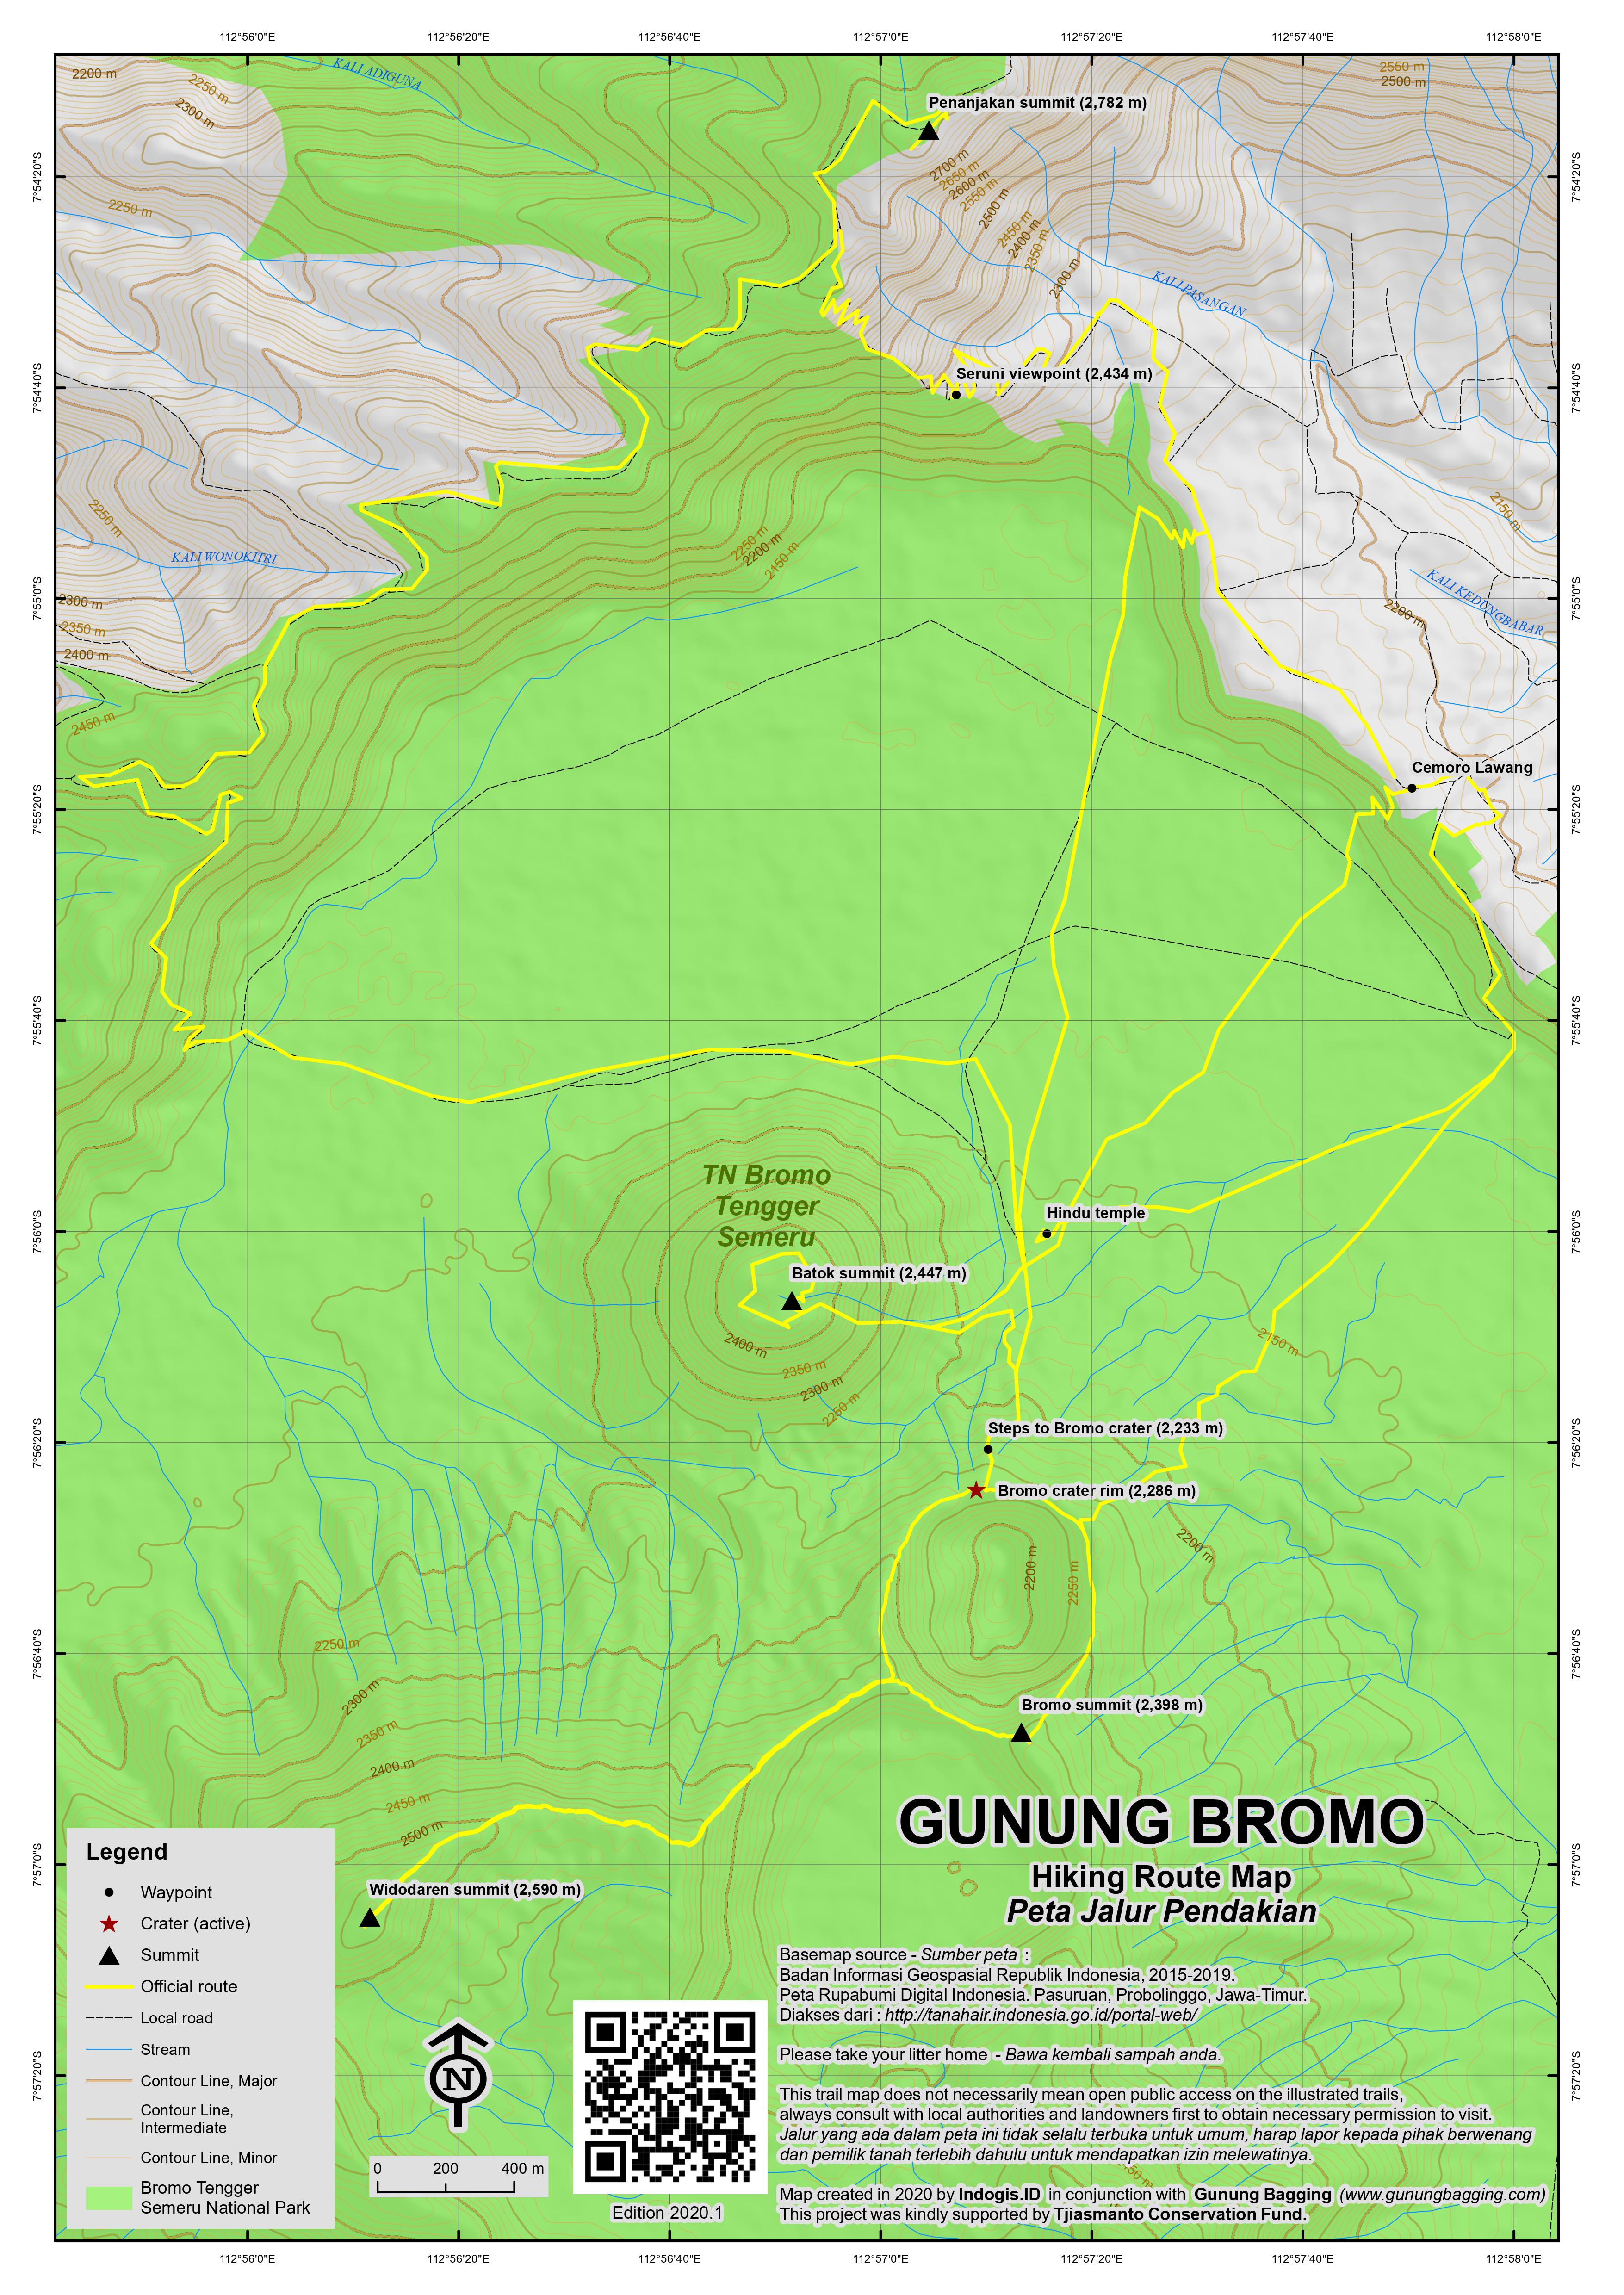 Peta Jalur Pendakian Gunung Bromo